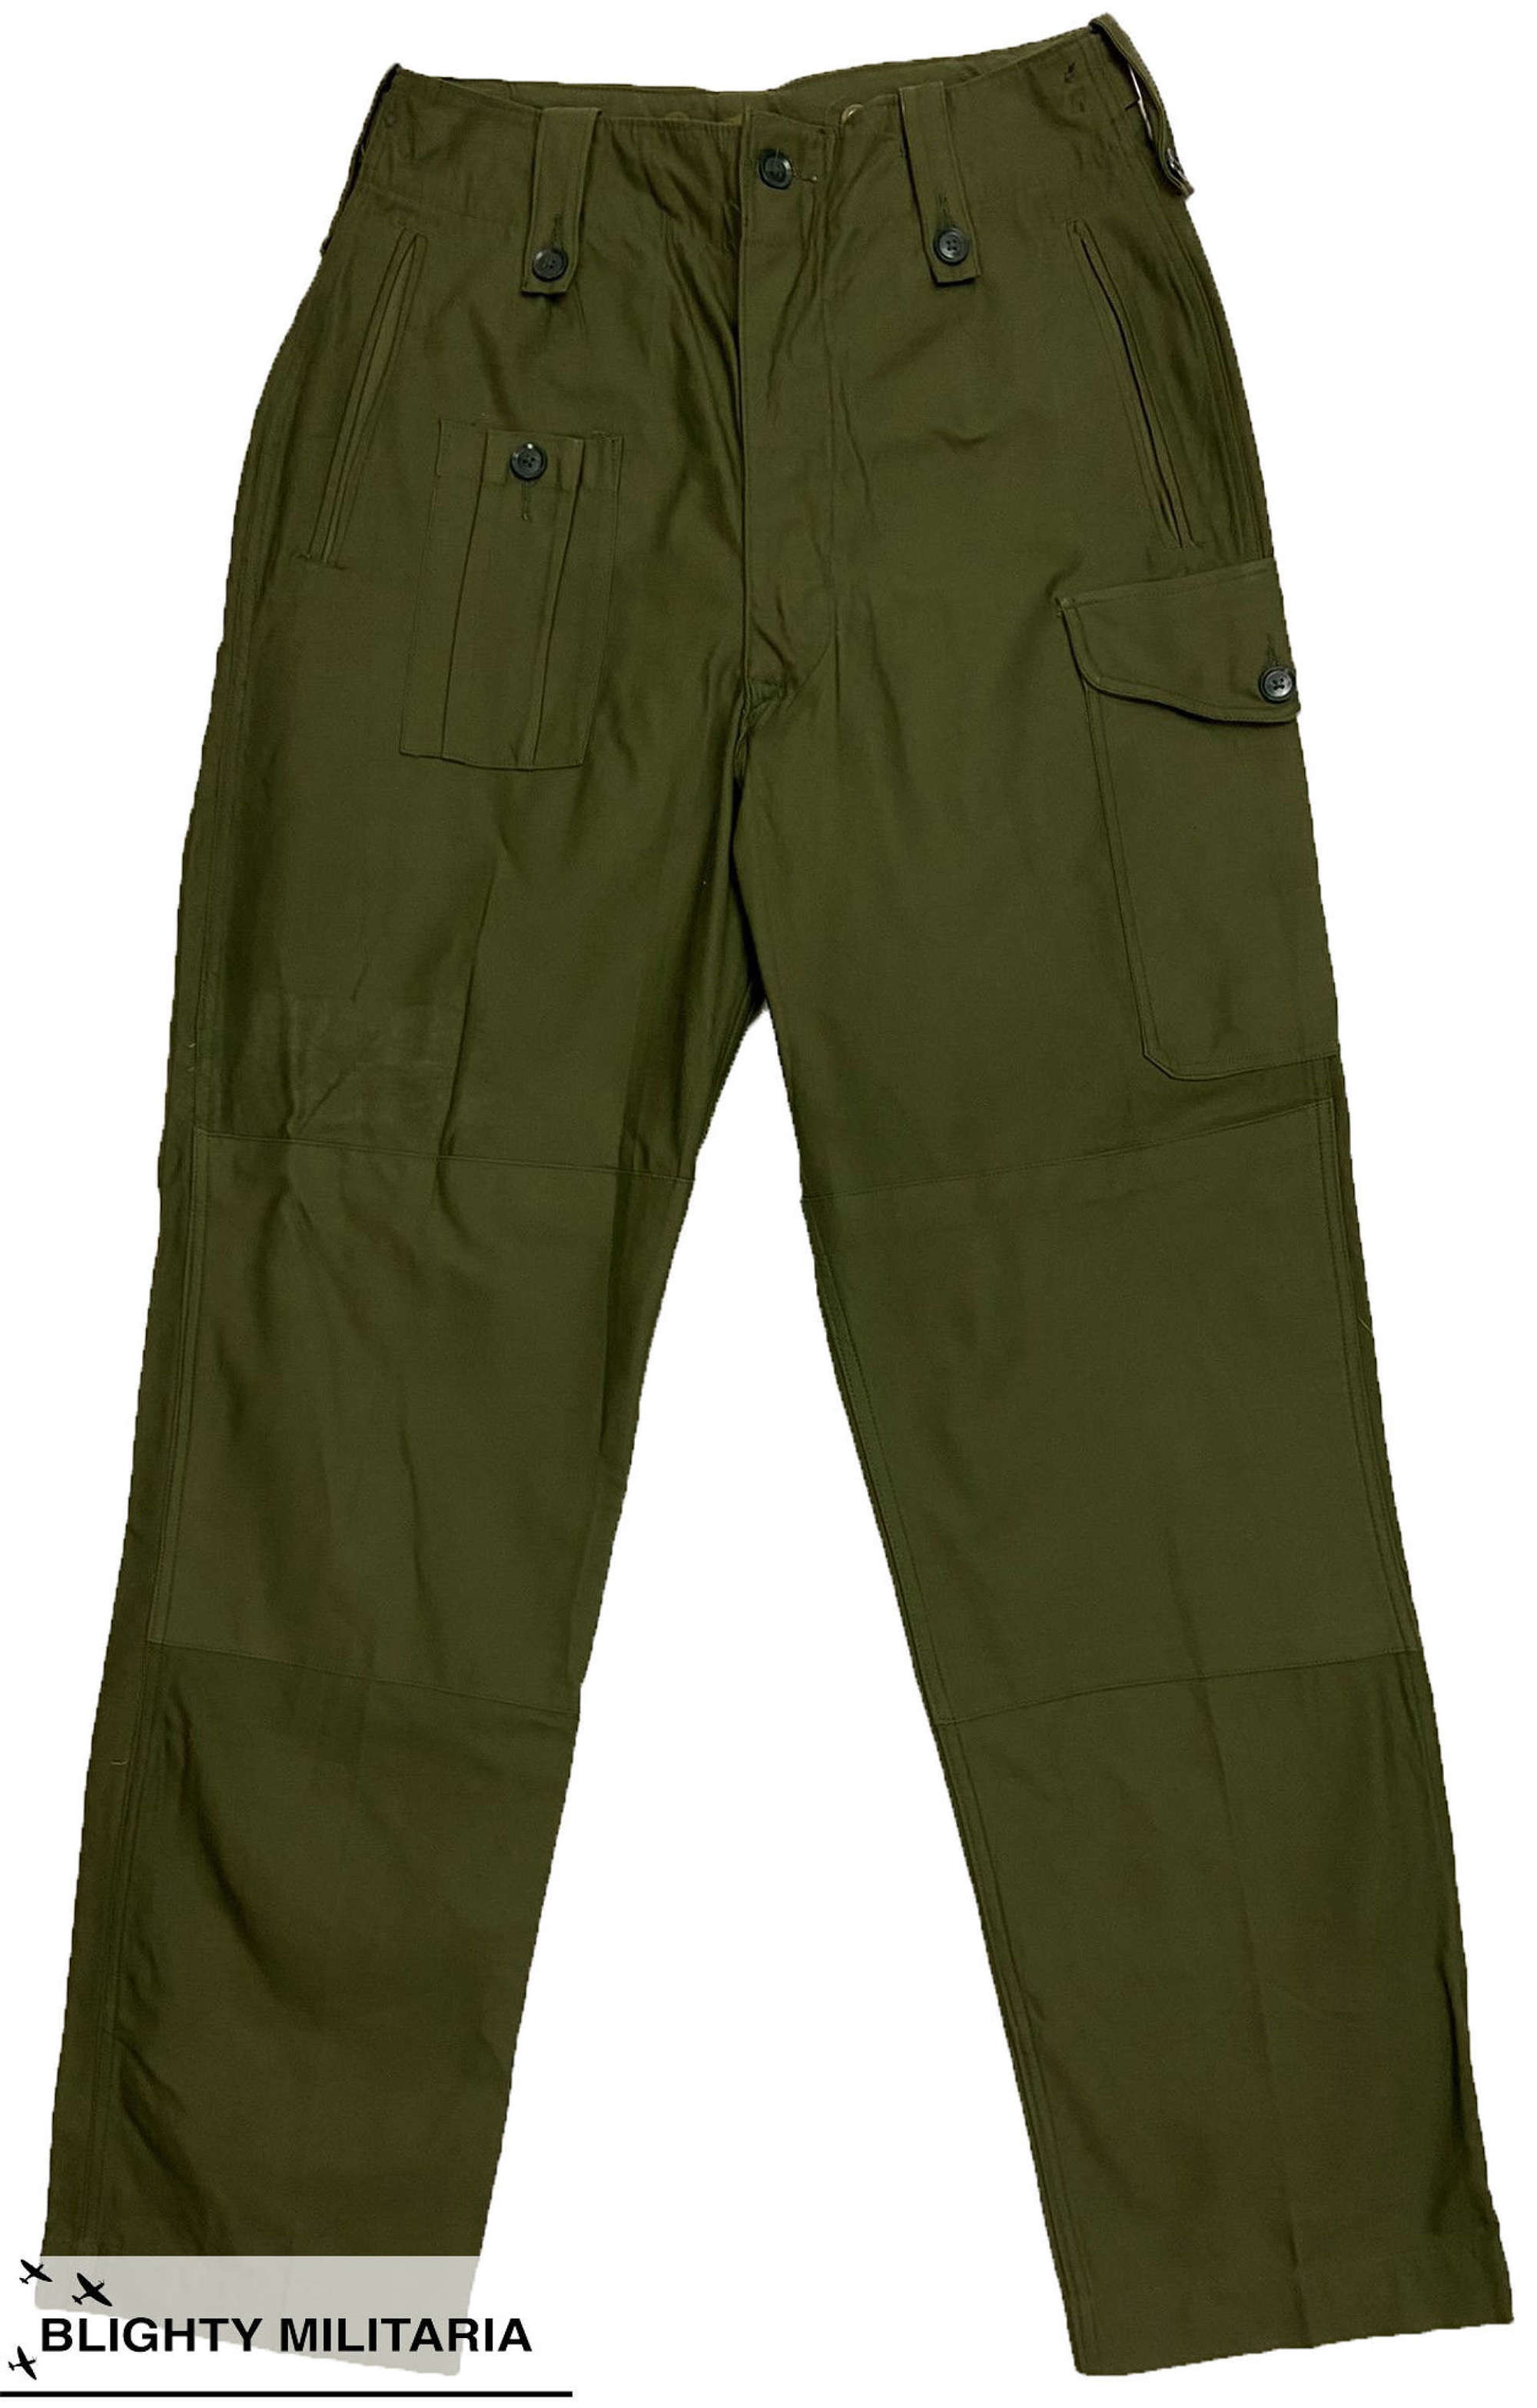 Original British Army 1960 Pattern Combat Trousers - Size 7